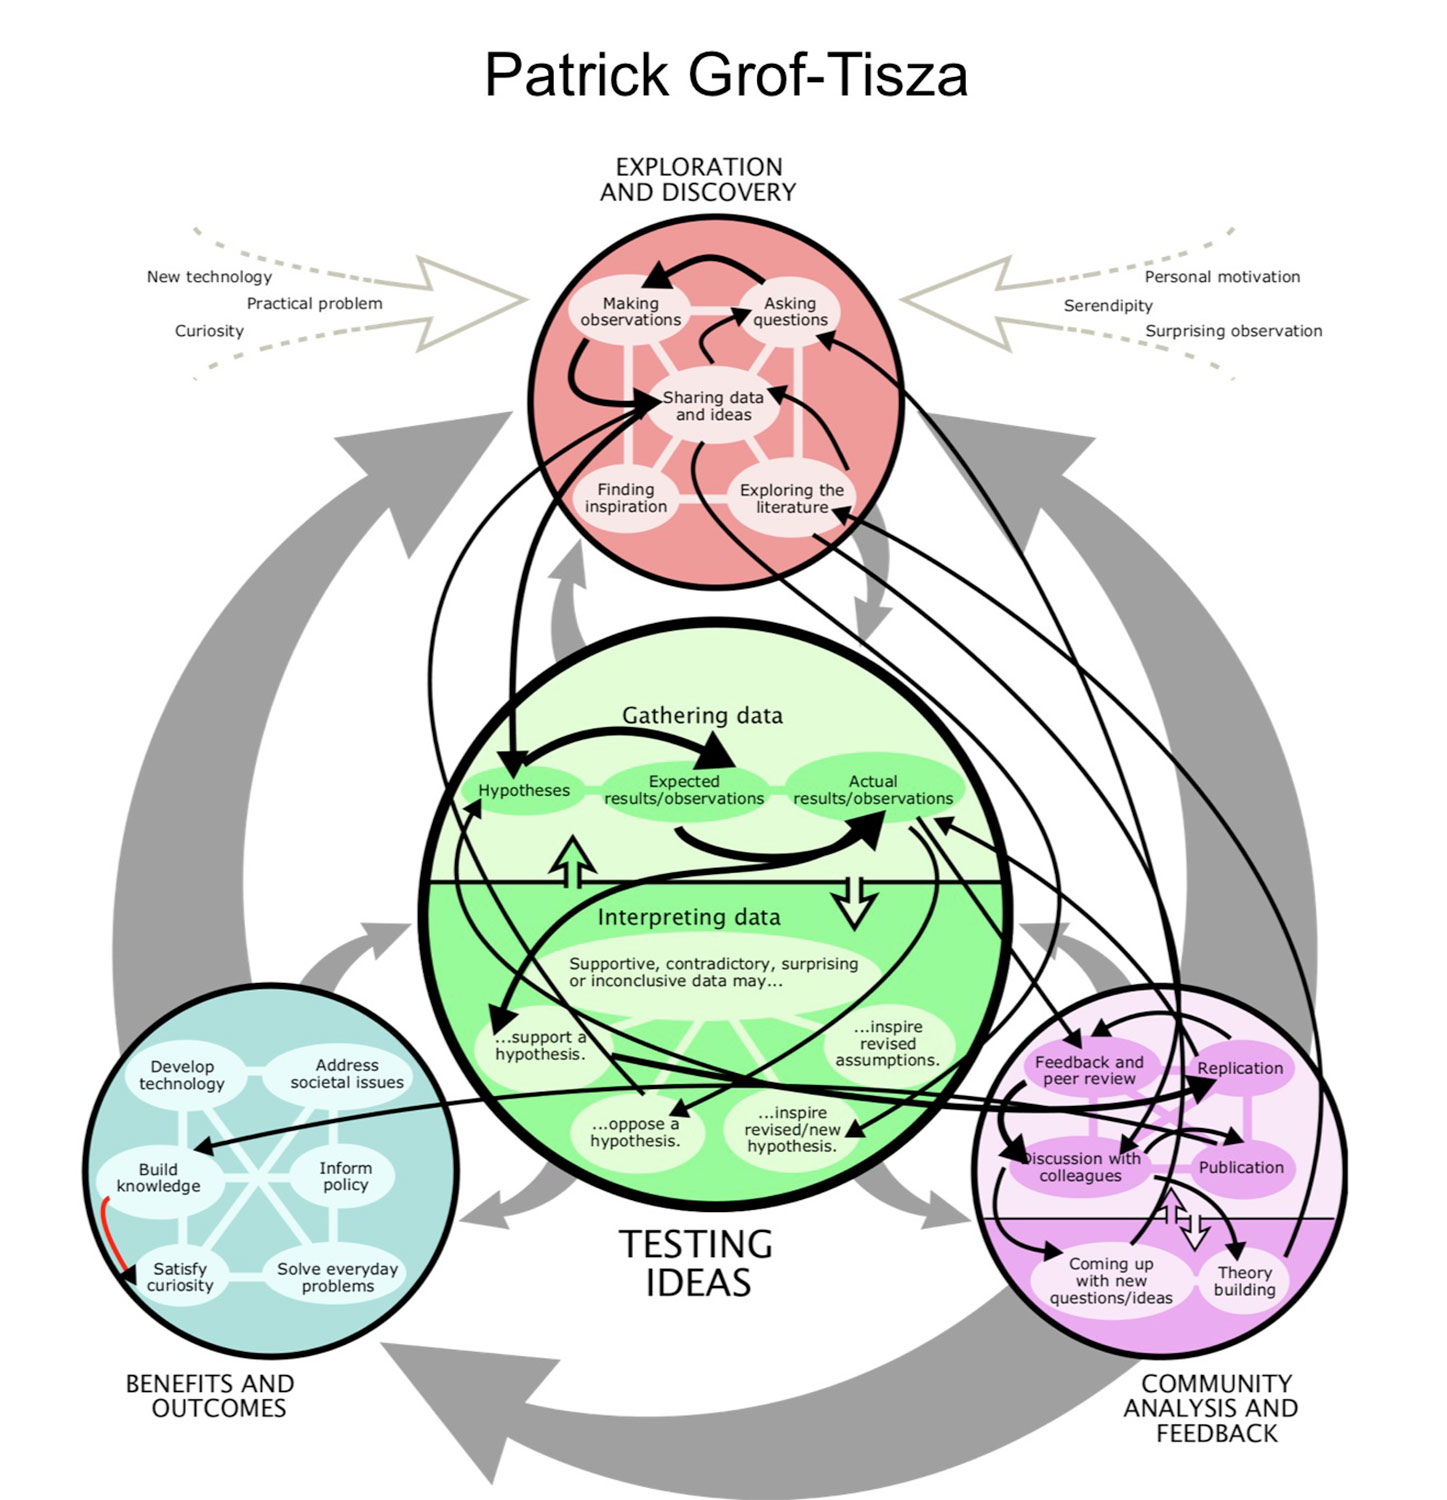 Patrick's Science Map